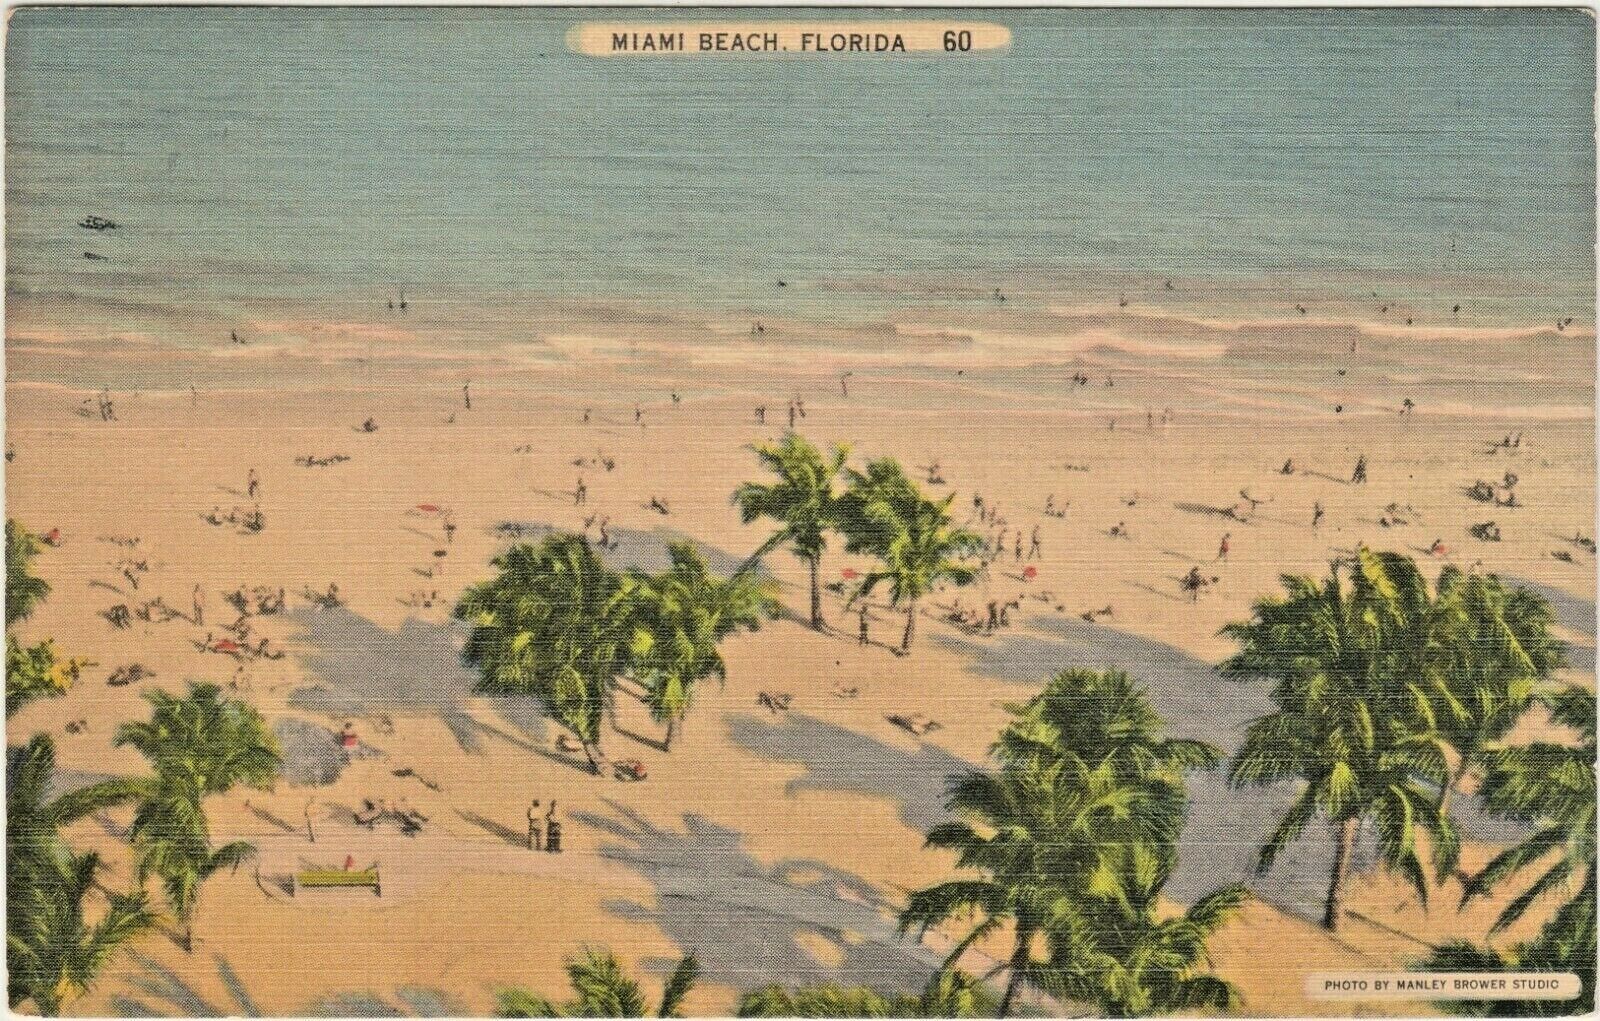 Miami Beach, Florida, Warm, Sparkling waters of Atlantic Ocean & Cocoanut Palms